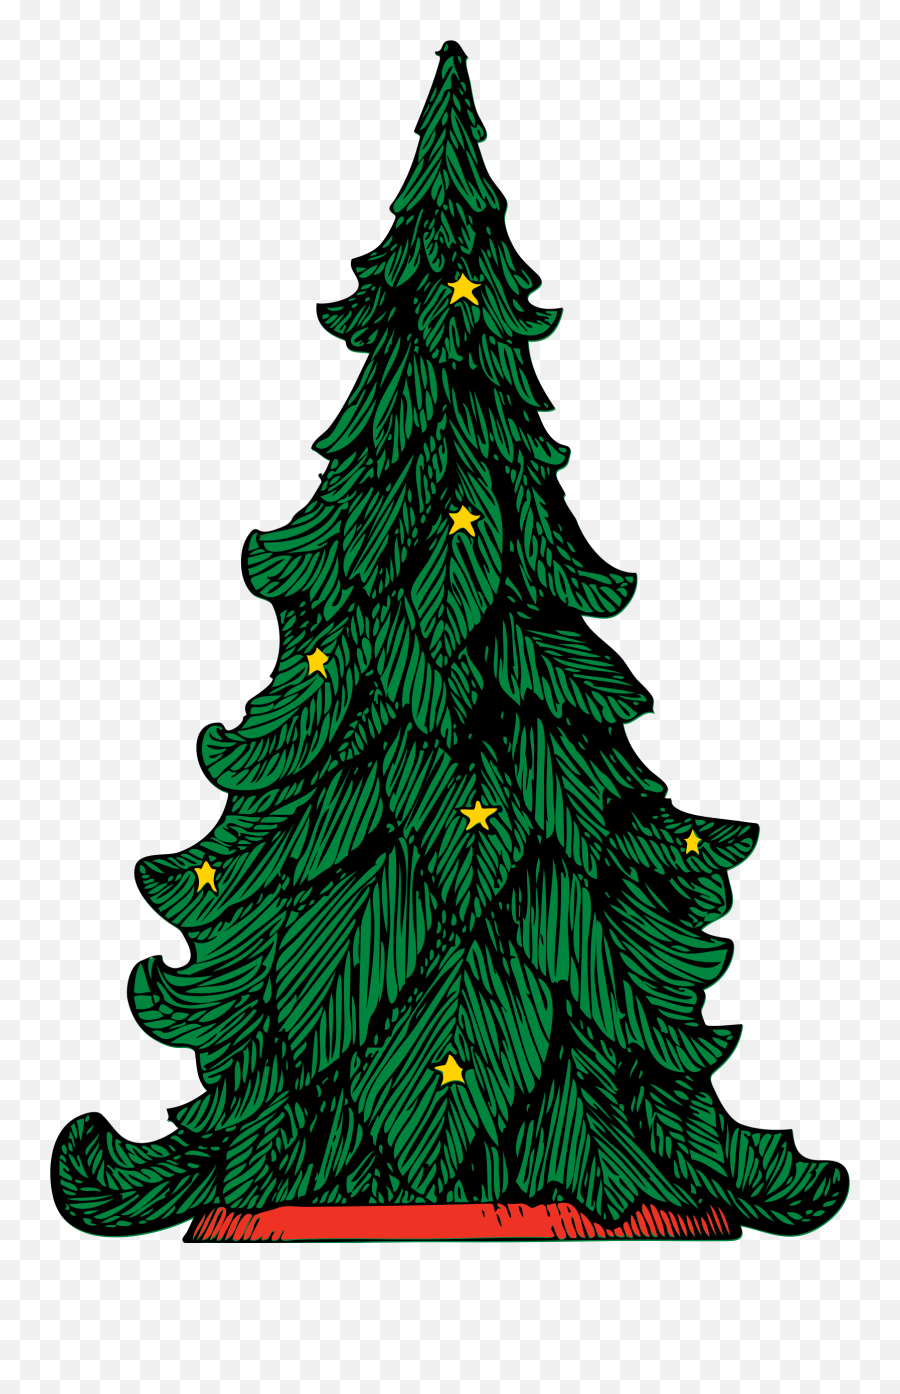 Free Image On Pixabay - Christmas Tree Xmas Green Christmas Tree Clip Art Emoji,Christmas Tree Clipart